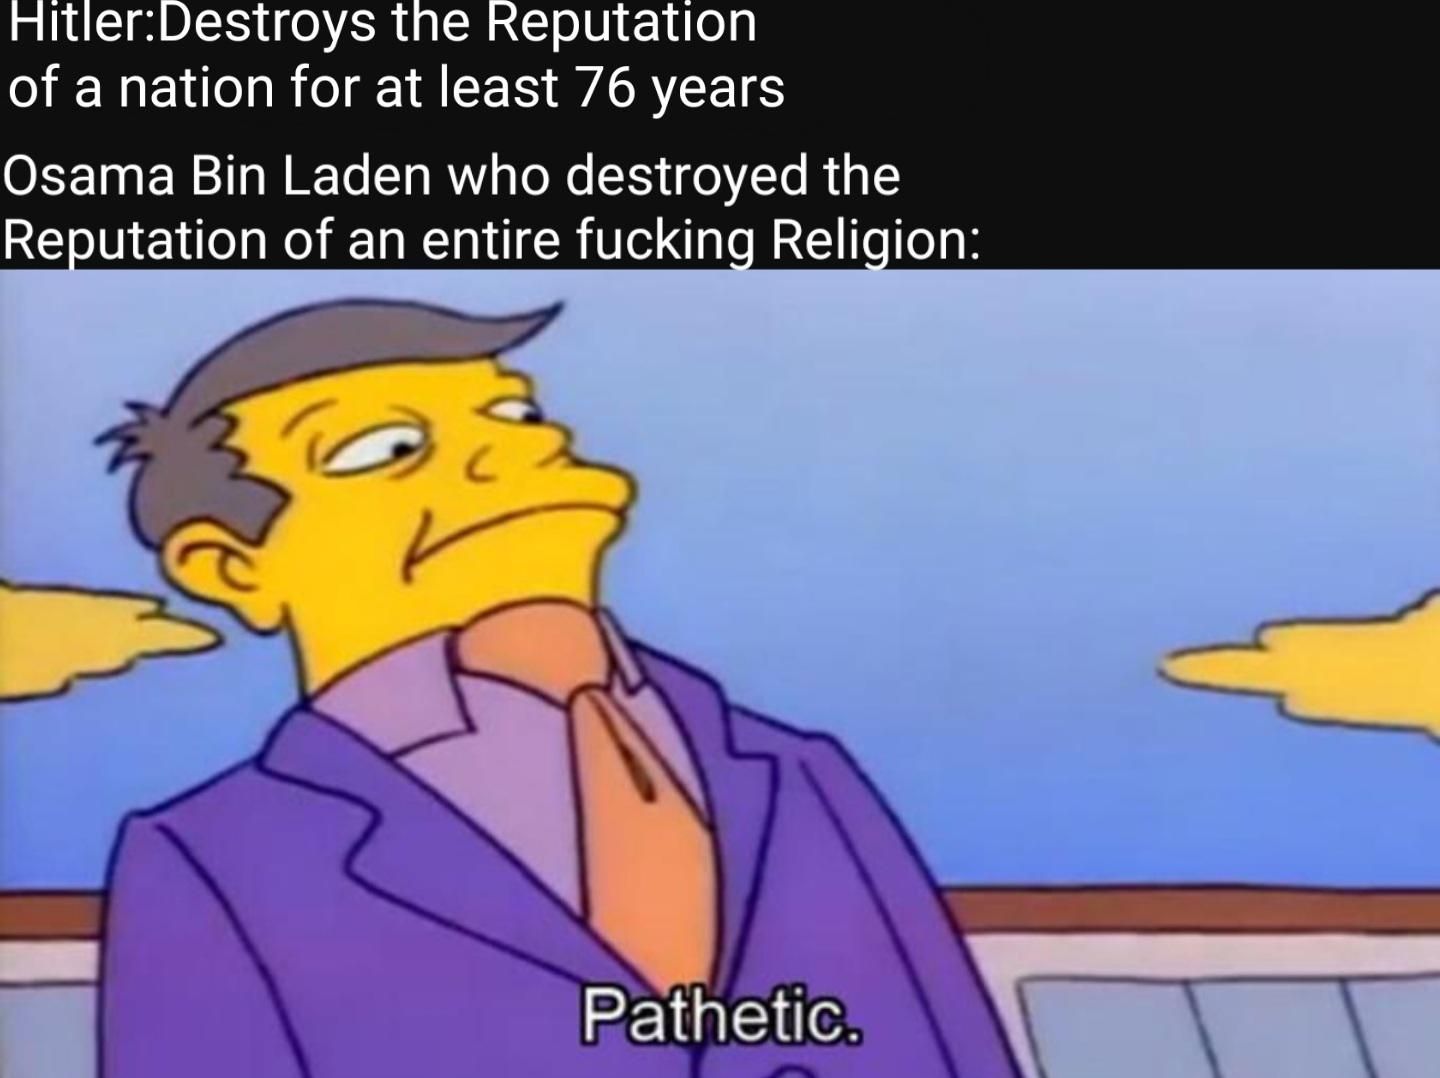 Hitler and Bin Laden